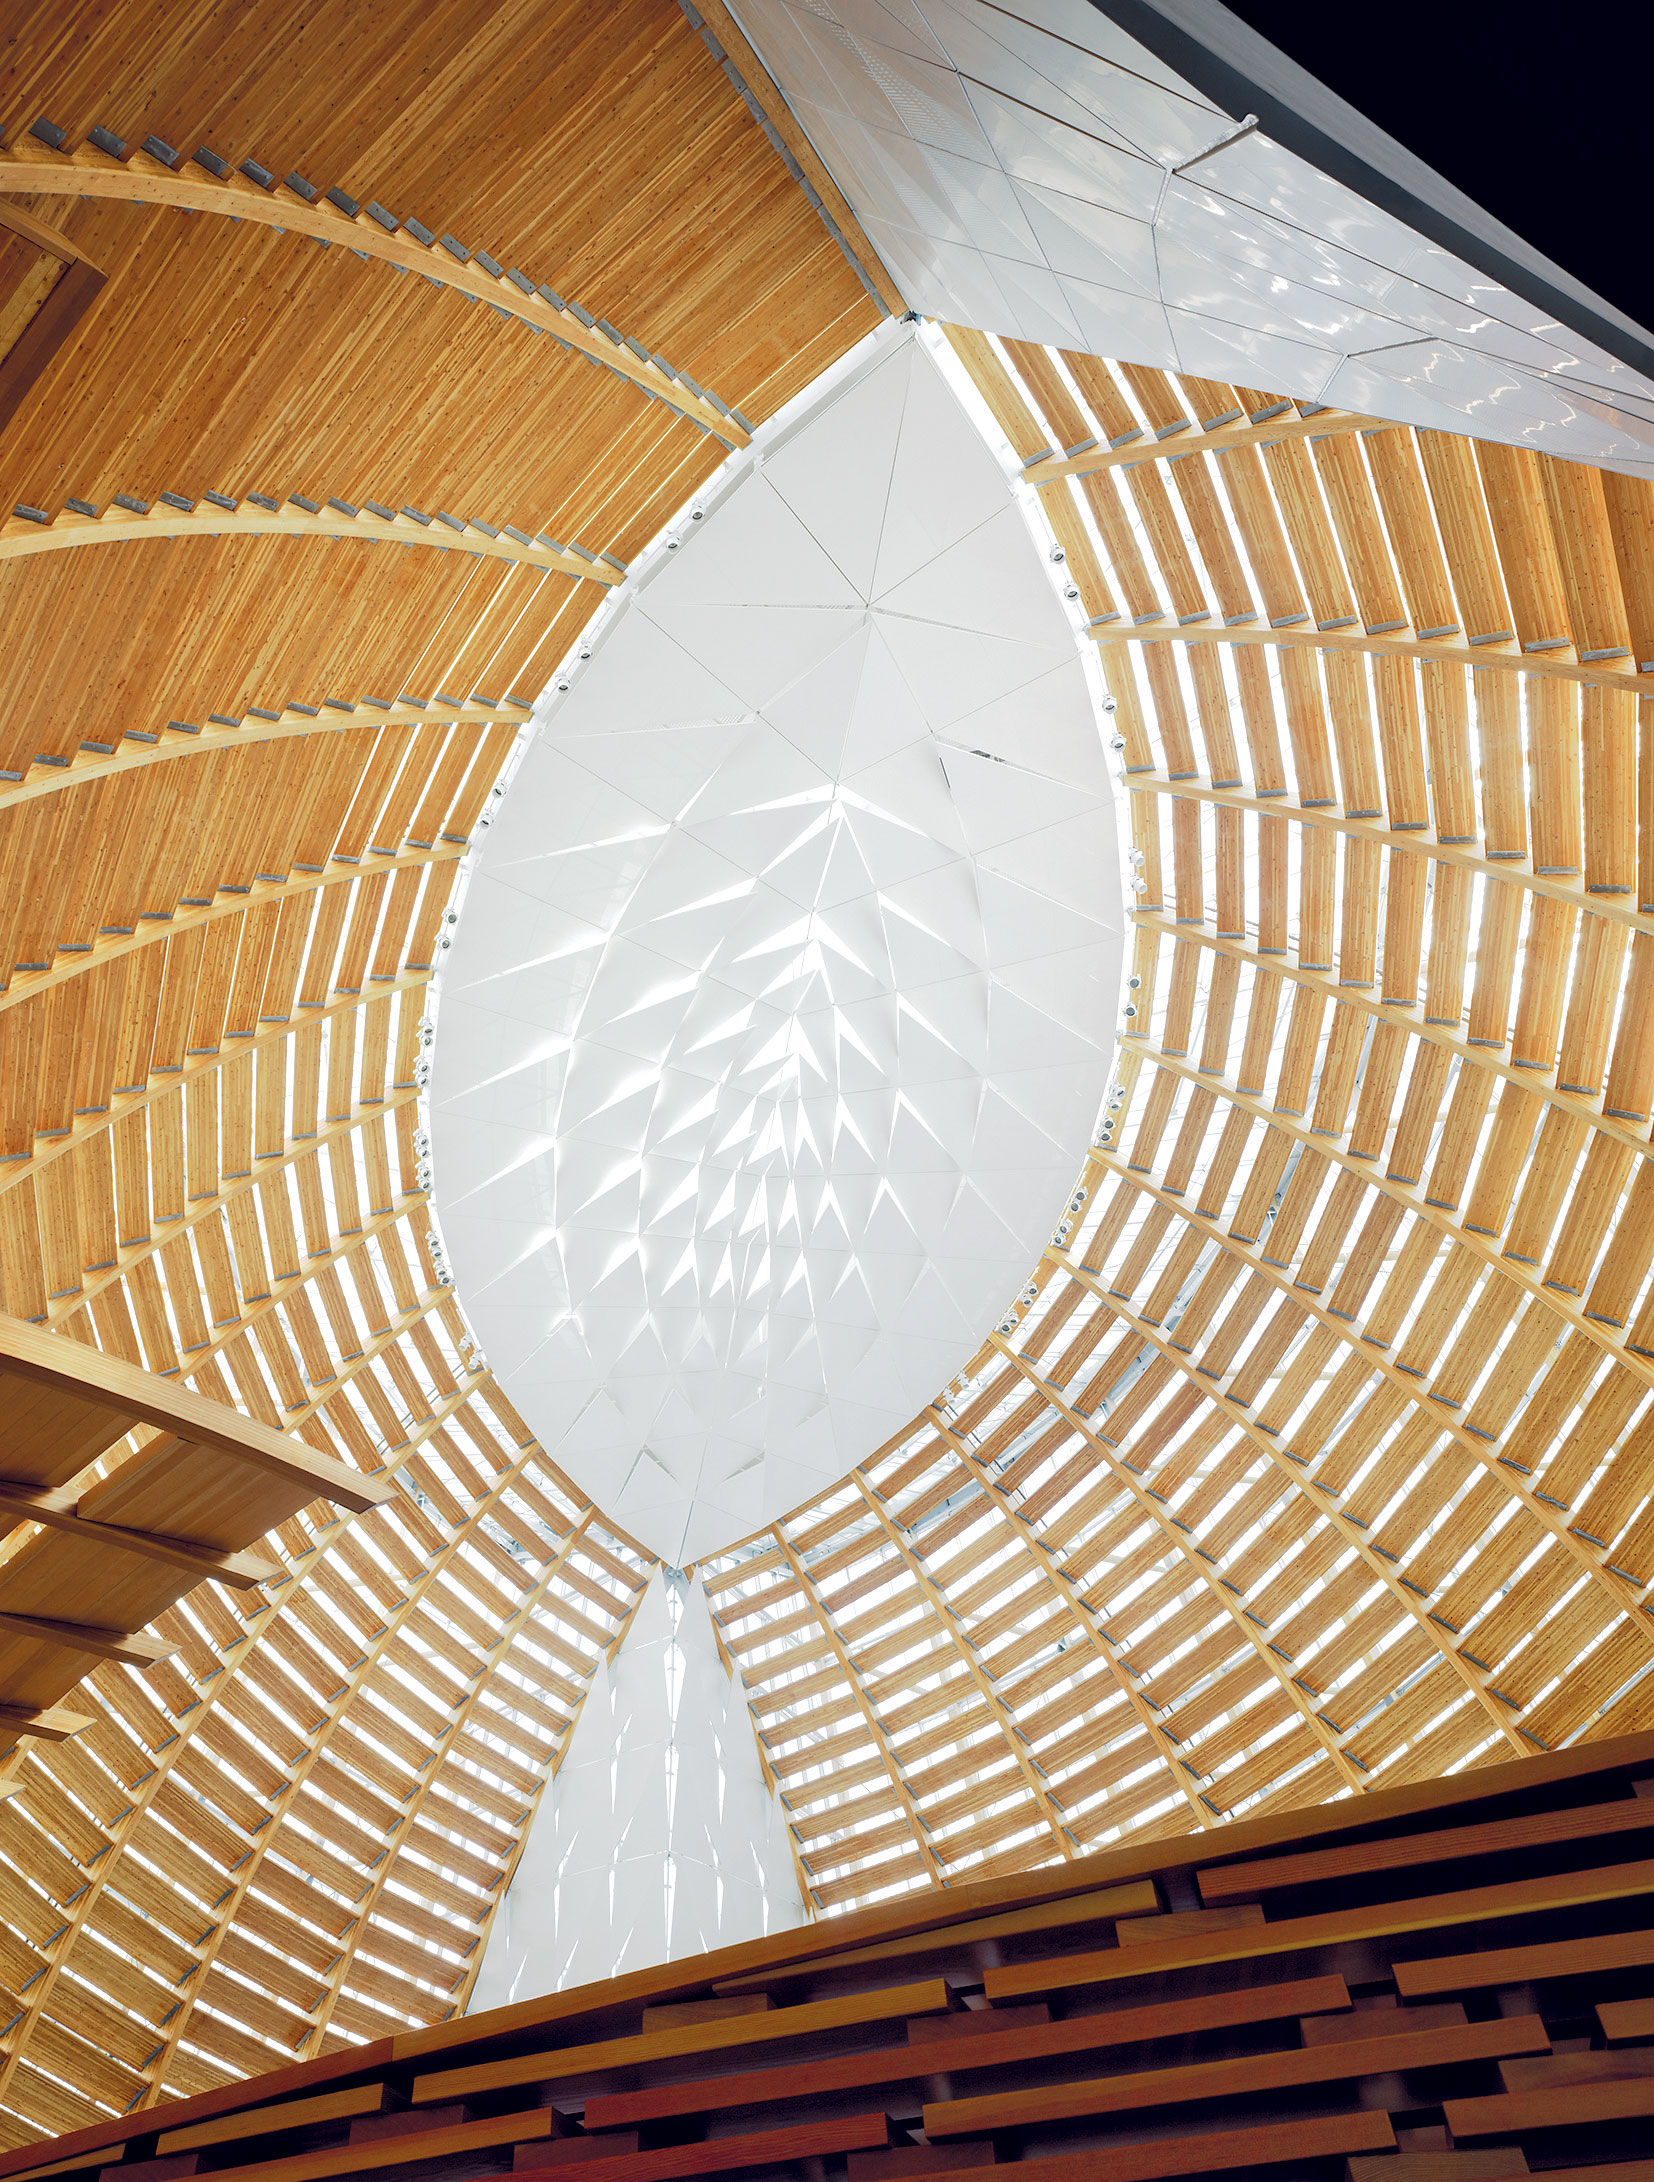 Pohľad na strop s pohyblivými tieniacimi šablónami, symbolika Vesica Pisces. Foto: © Skidmore, Owings & Merrill LLP | Cesar Rubio, 2013. All rights reserved